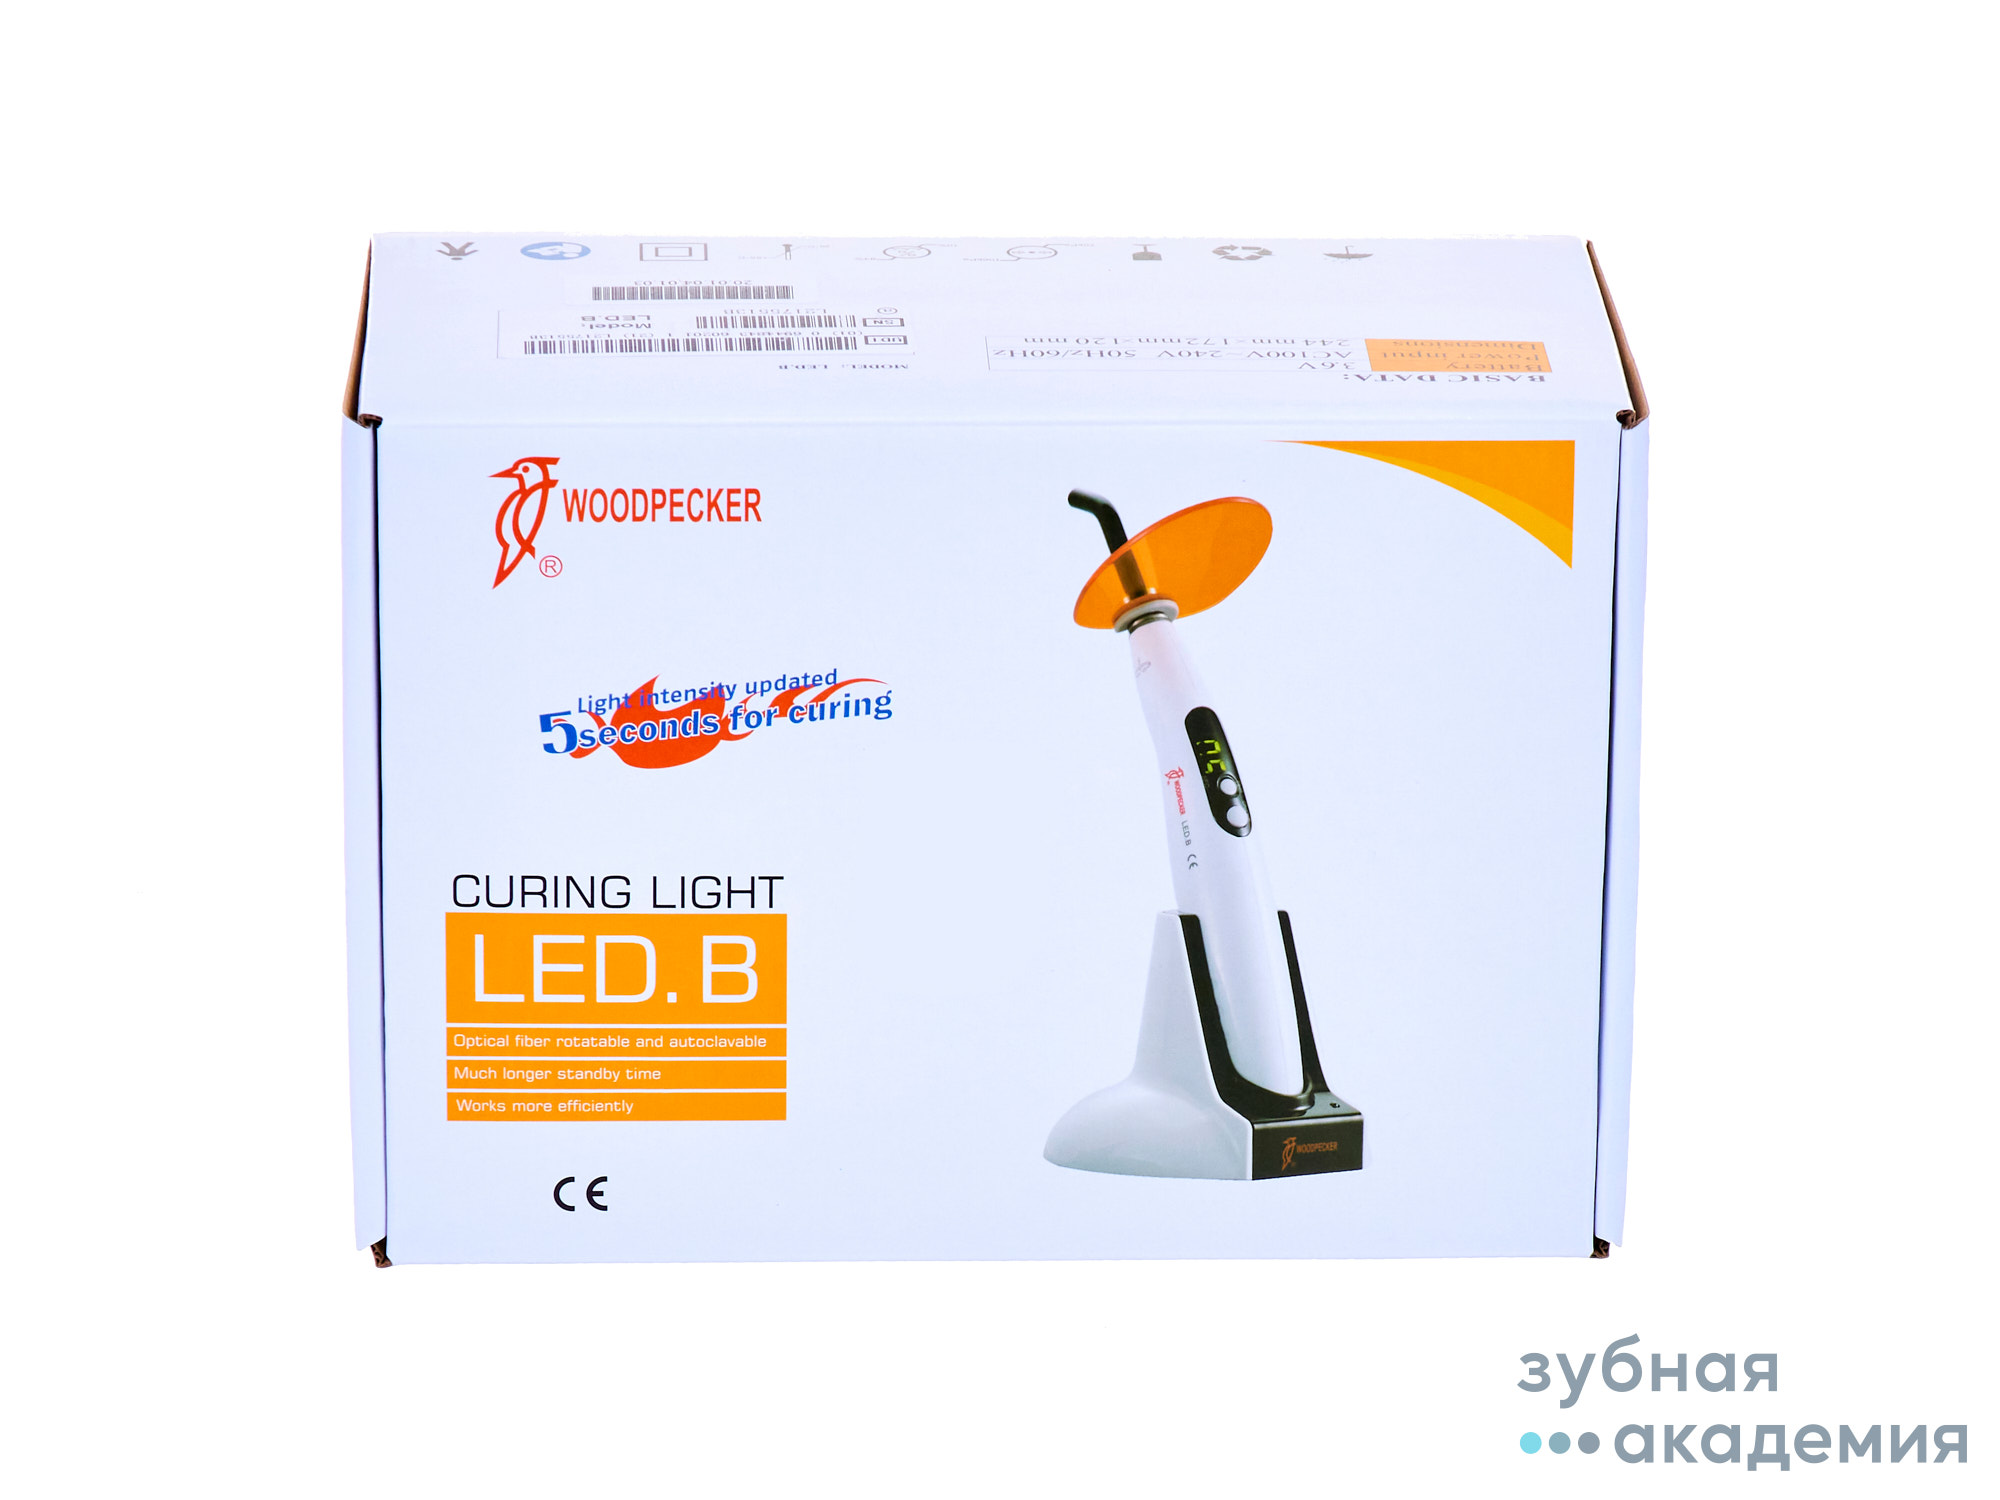 Лампа полимеризационная "WOODPECKER" LED, В /WOODPECKER/ Китай